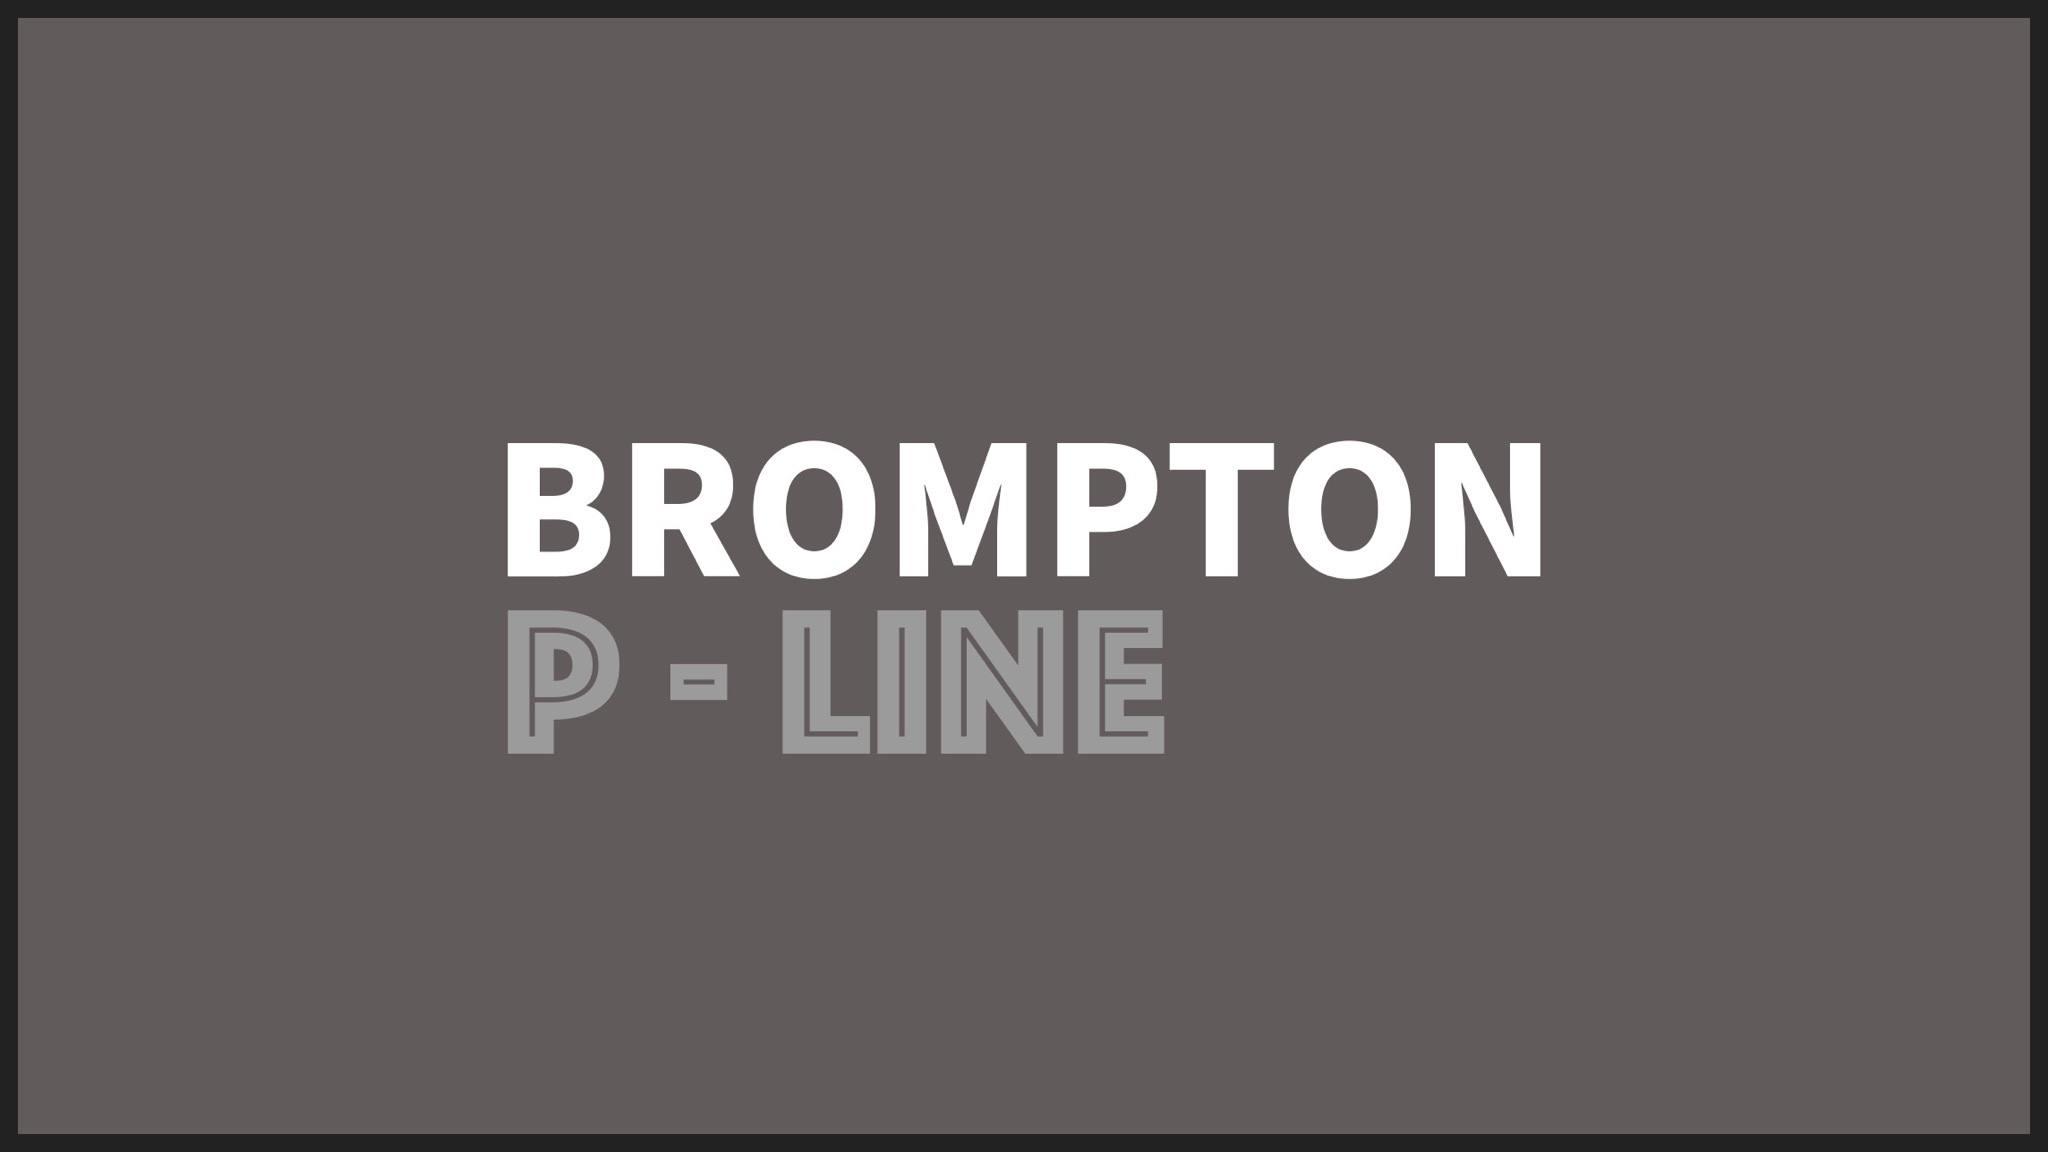 Brompton p line introduced top